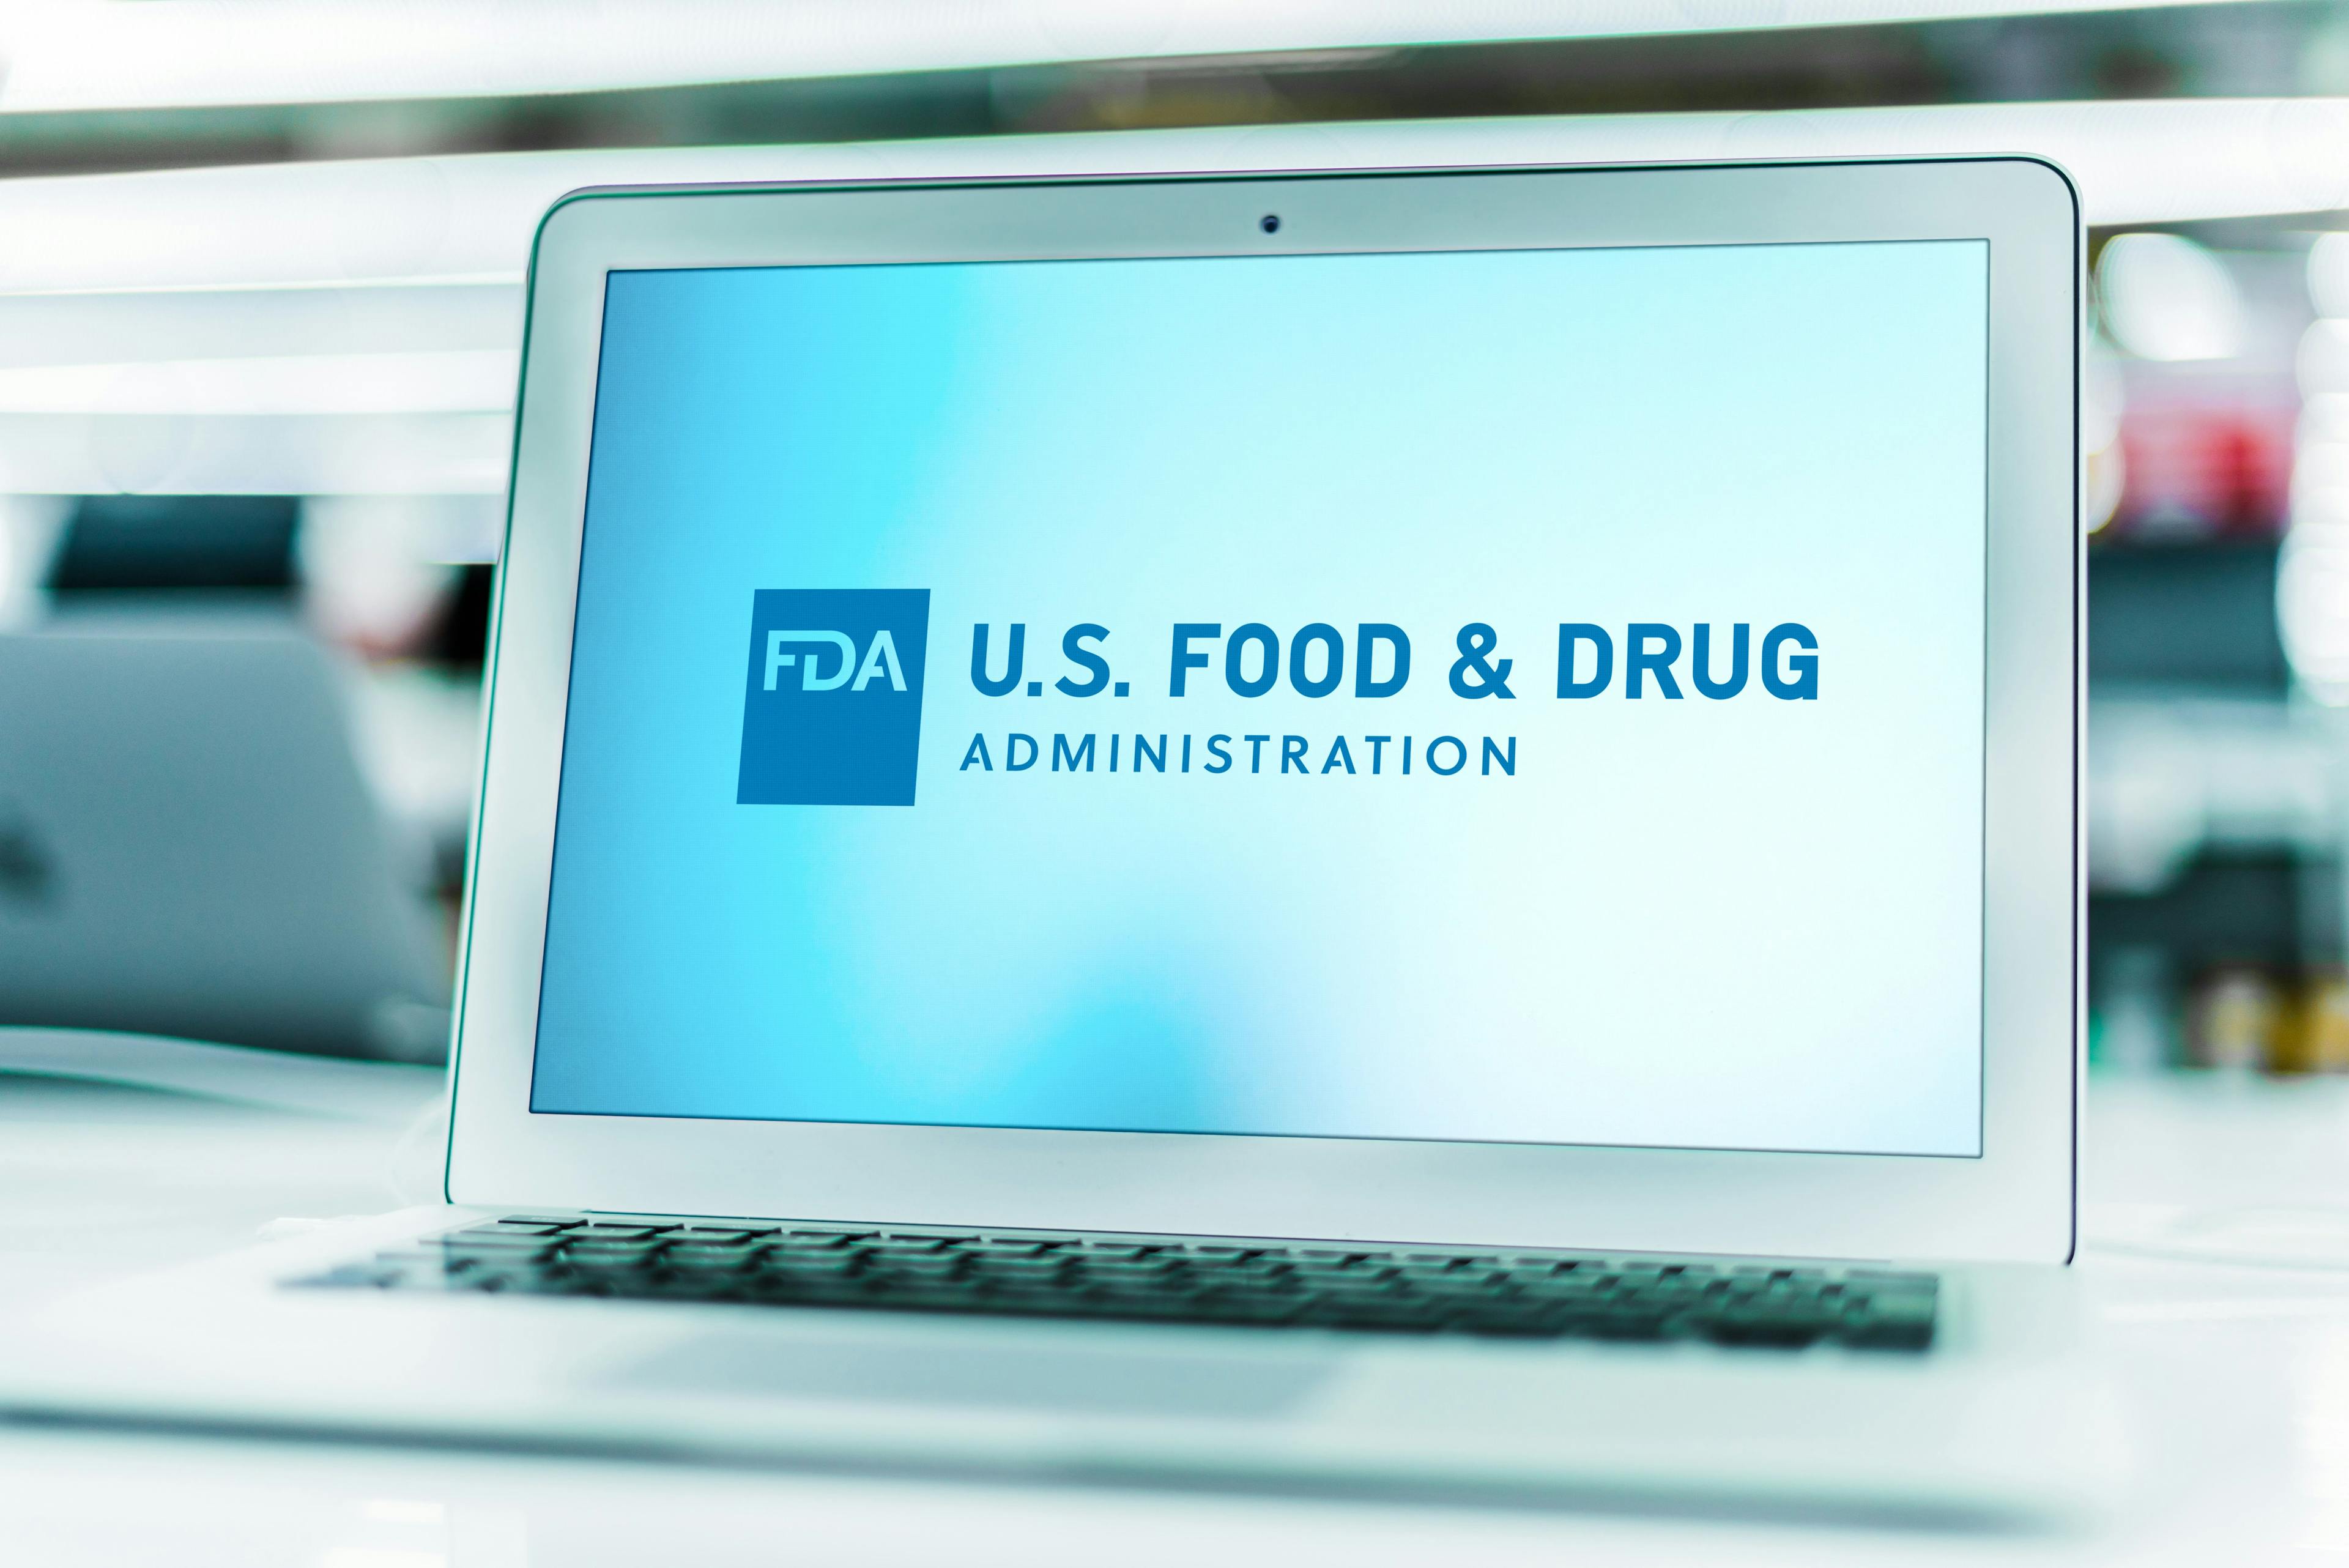 FDA accepts application for VP-102 for treating molluscum contagiosum